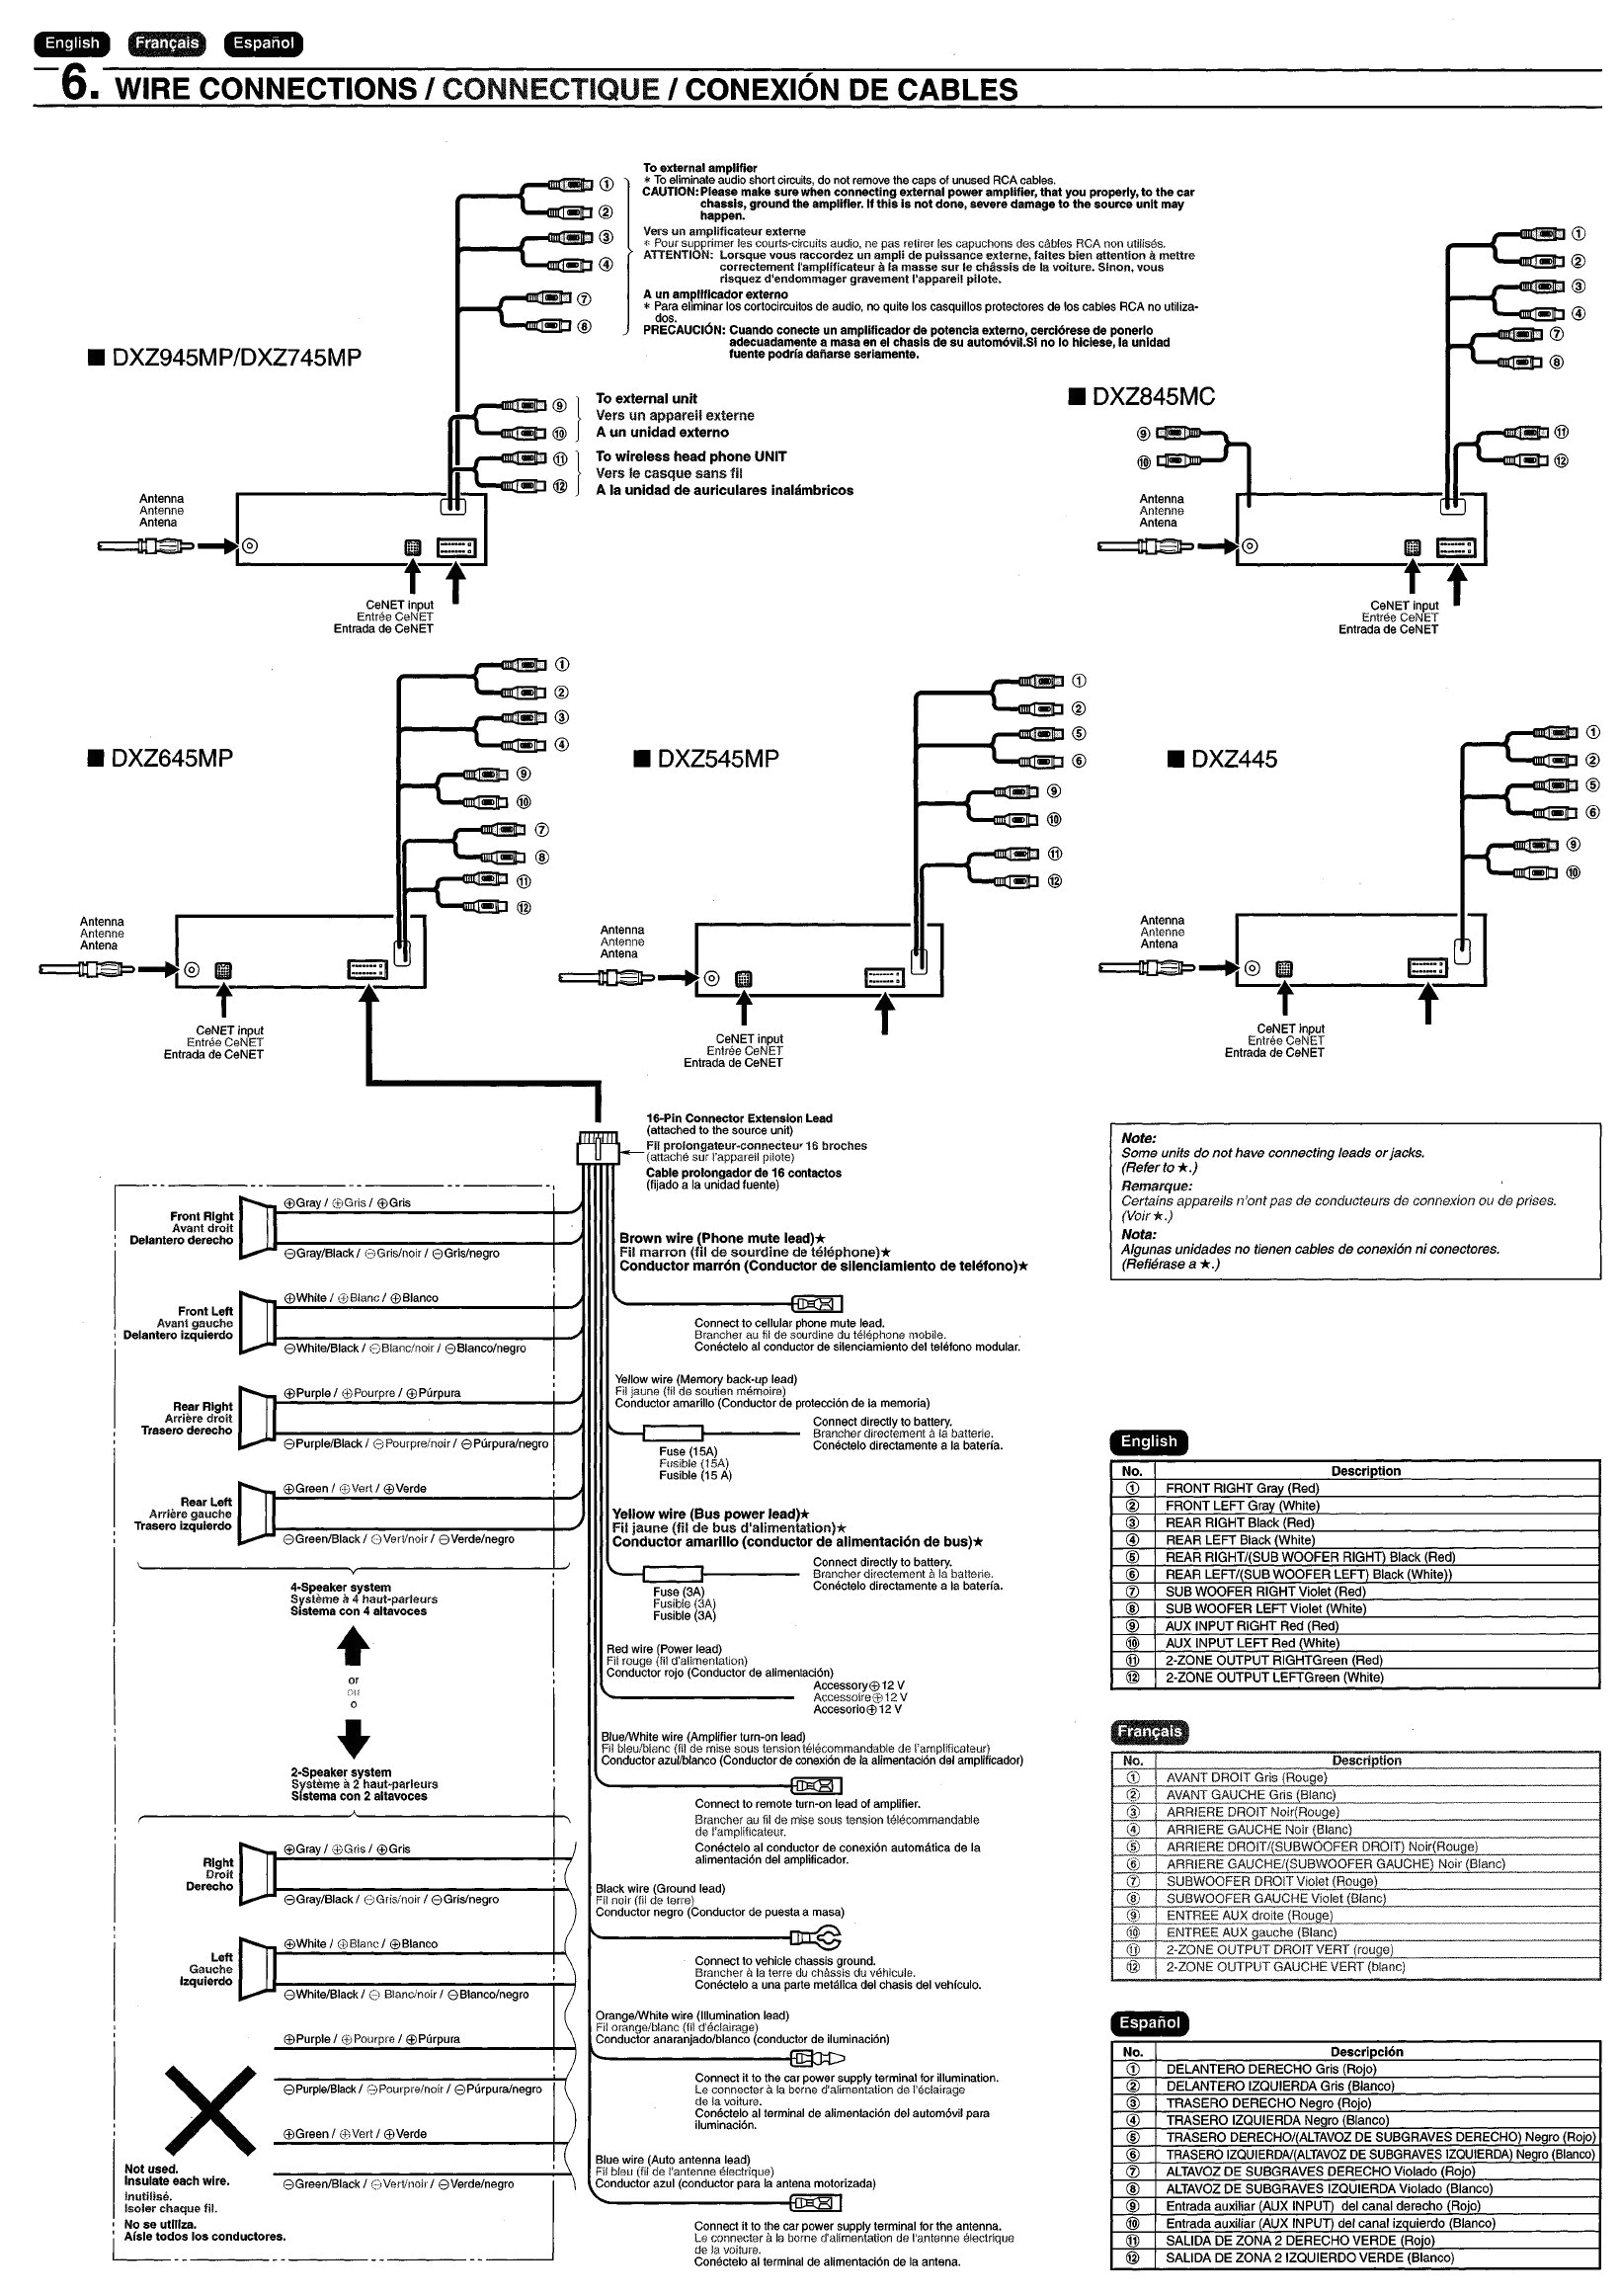 clarion 16 pin wiring diagram detailed schematics diagram rh antonartgallery com clarion cmd5 wiring diagram clarion